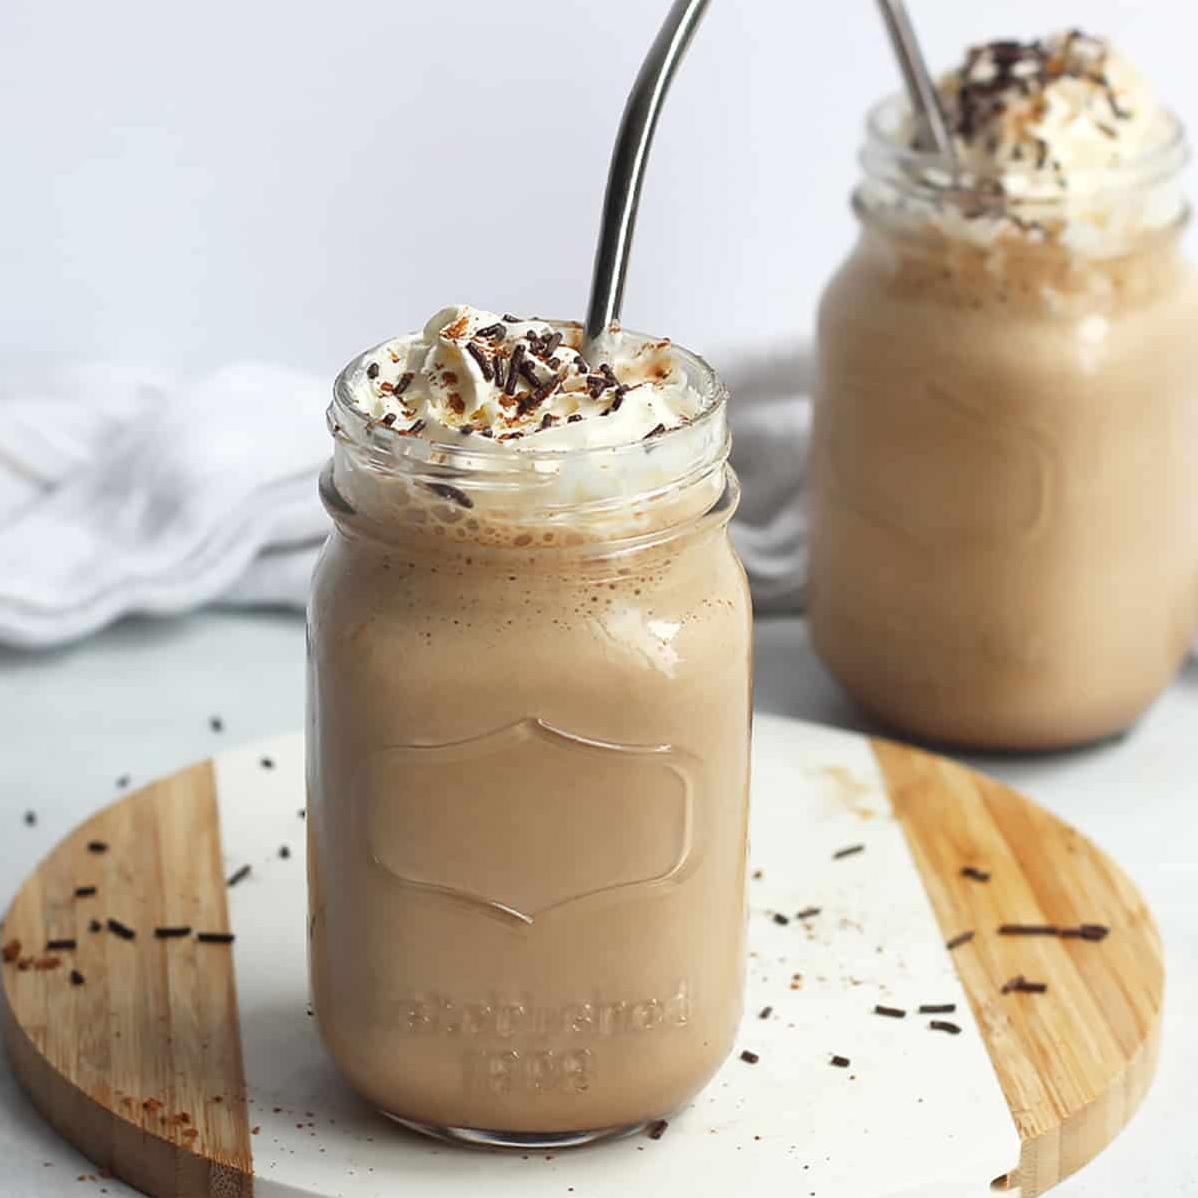  Satisfy your caffeine & ice cream cravings with this Mocha Shake.